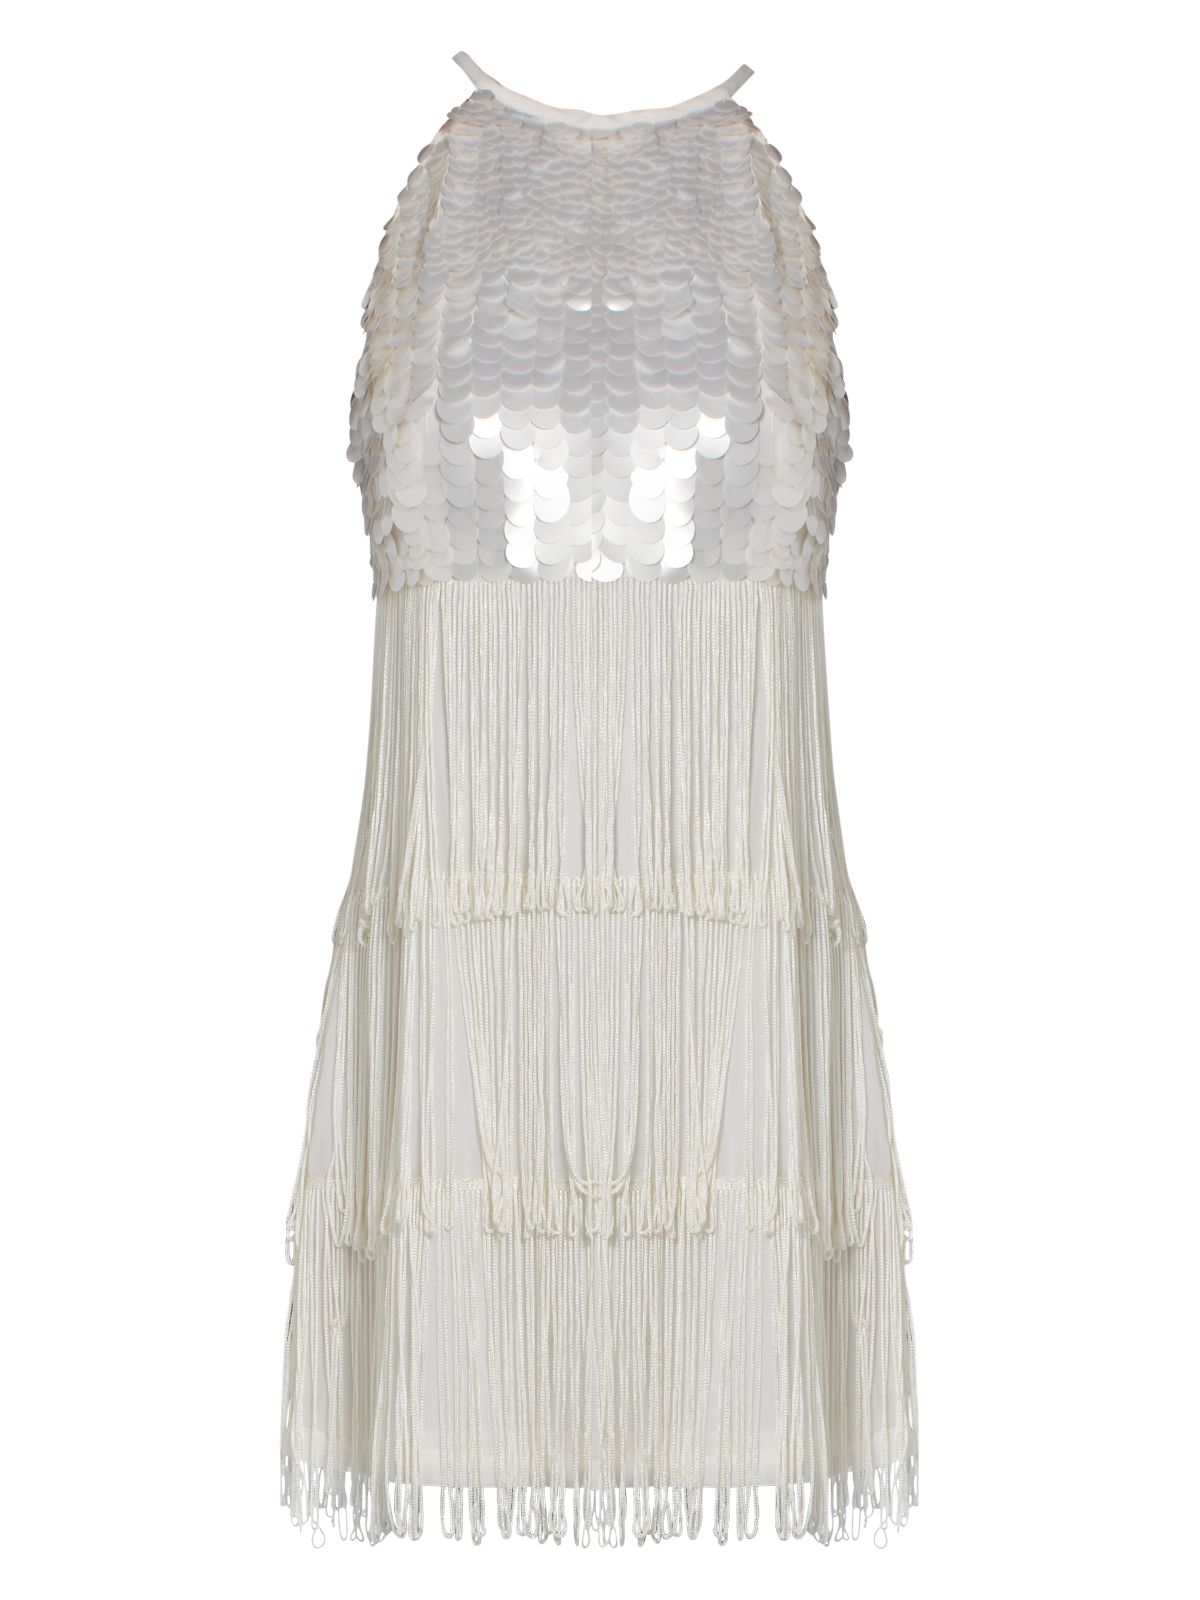 Jane Norman Sequin Tassel Dress in White (cream)